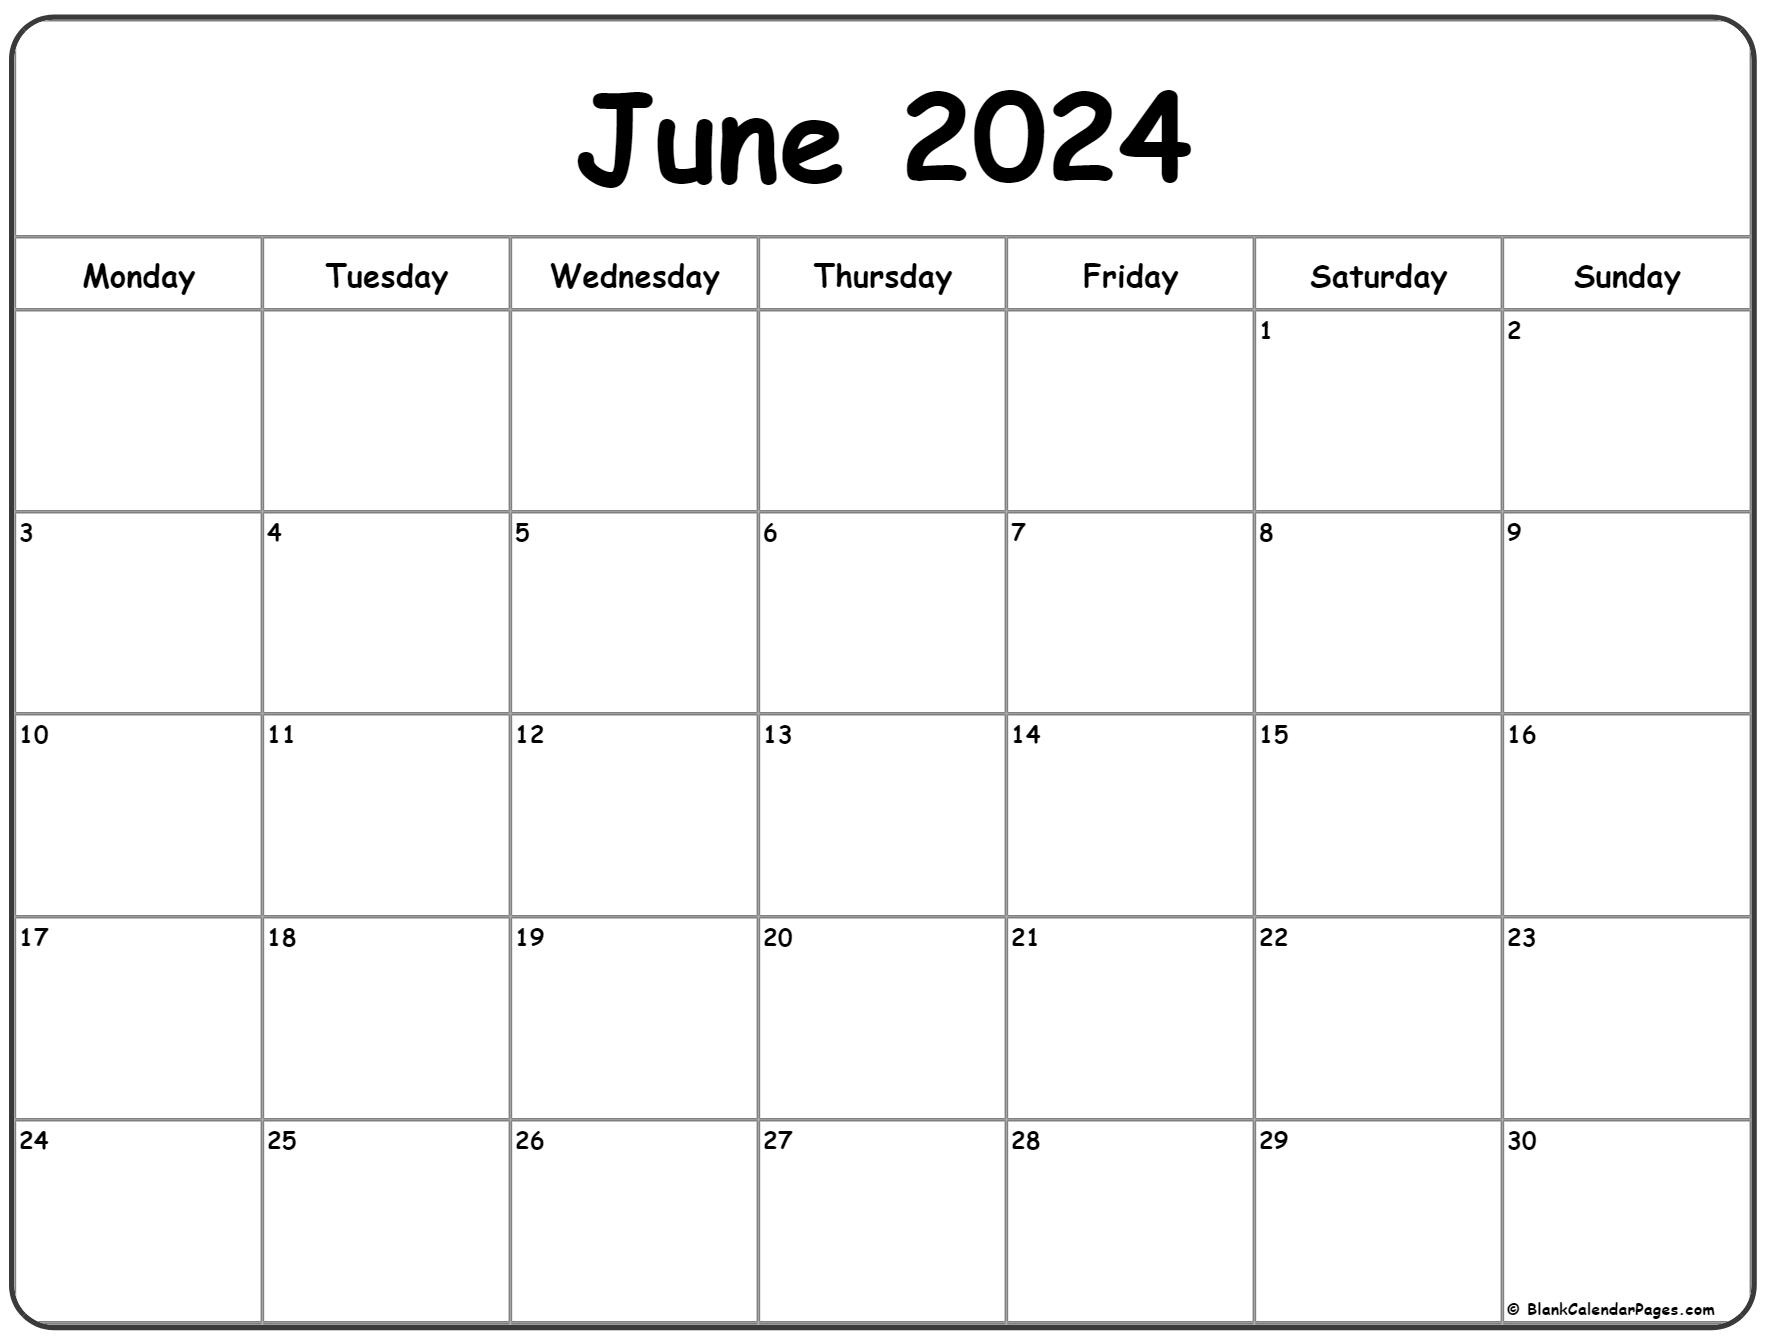 June 2024 Monday Calendar | Monday To Sunday throughout June 2024 Calendar